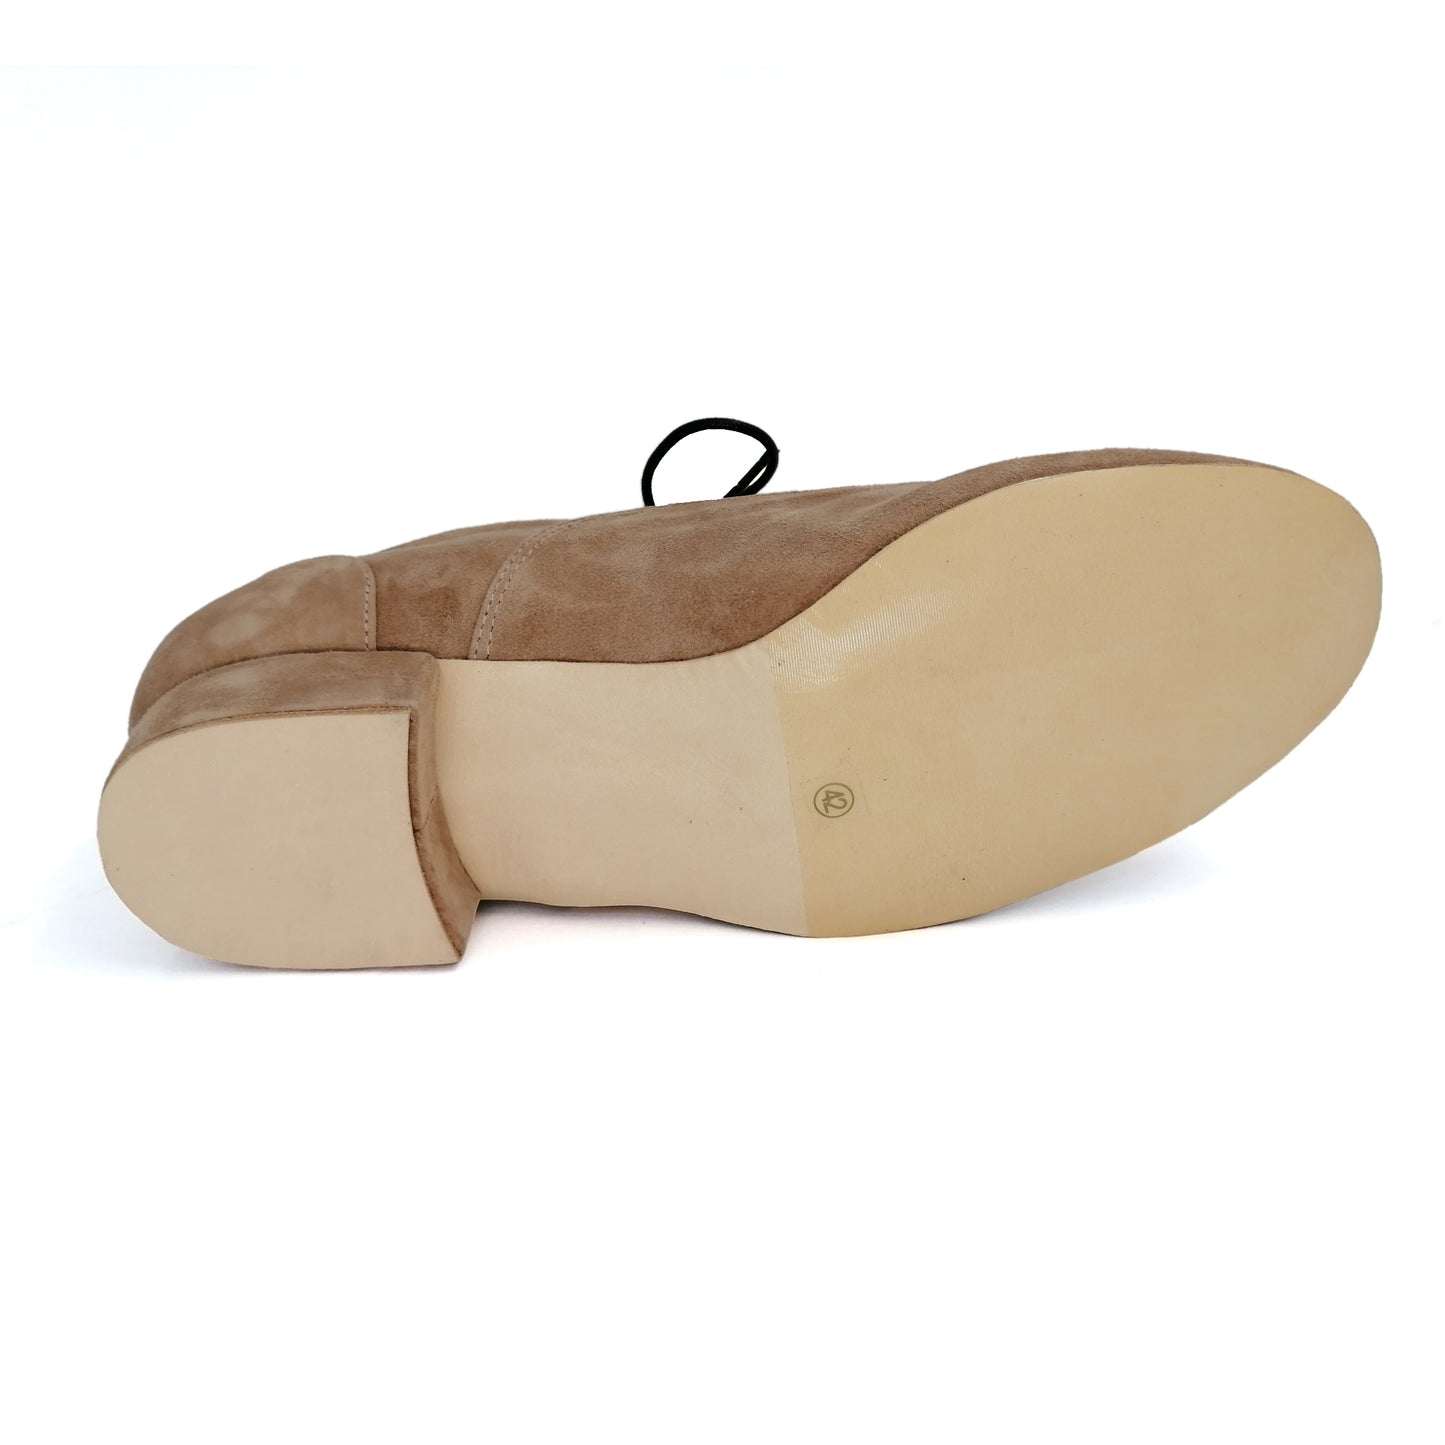 Pro Dancer Men's Argentine Tango Dance Shoes Leather Sole 1 inch Heel Lace-up Brown (PD-1002D)